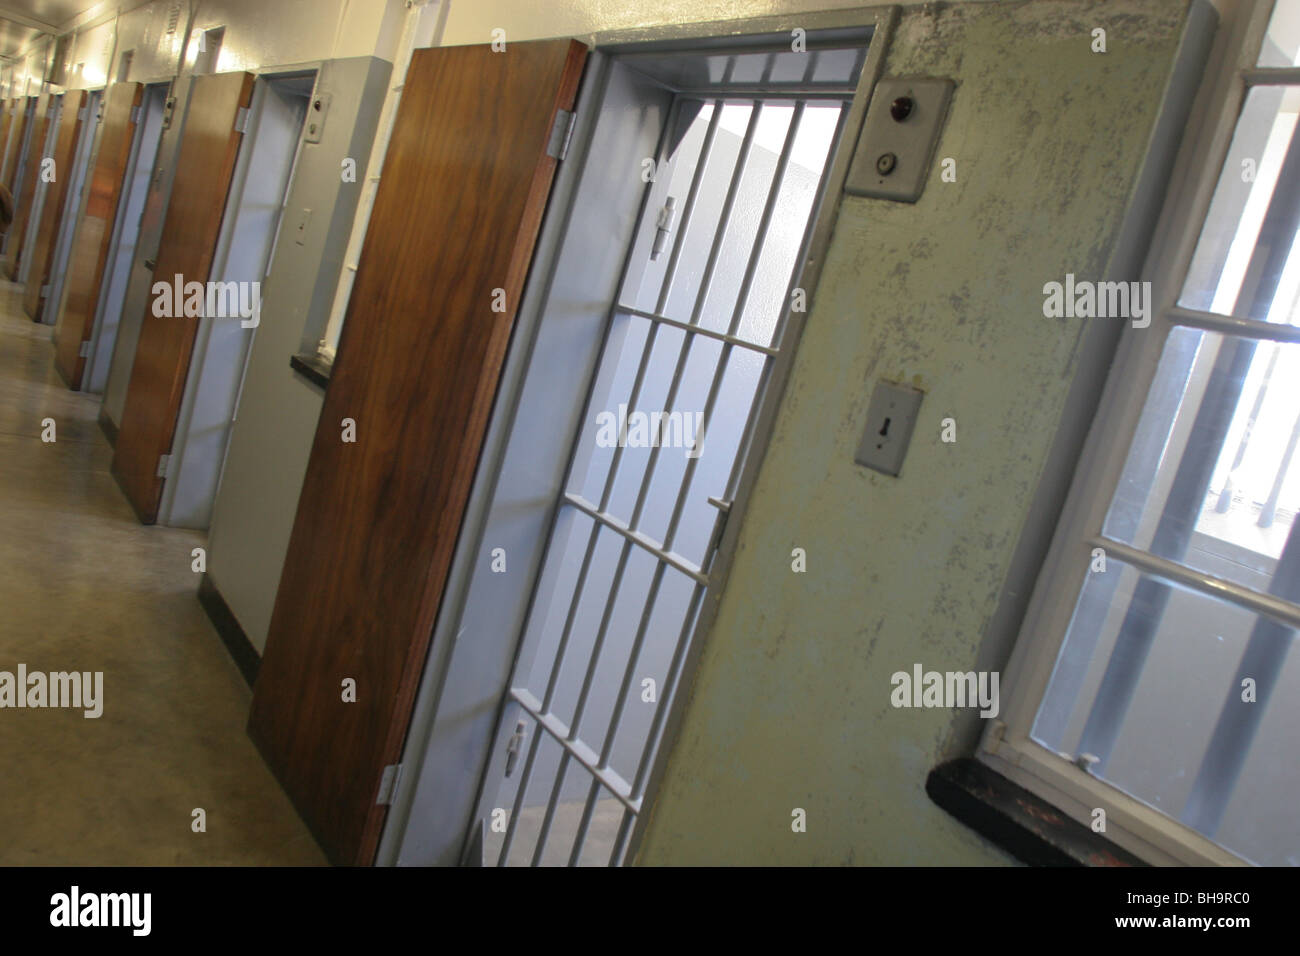 Robben Island prison, where Nelson Mandela was incarcerated, Robben Island, South Africa. Stock Photo